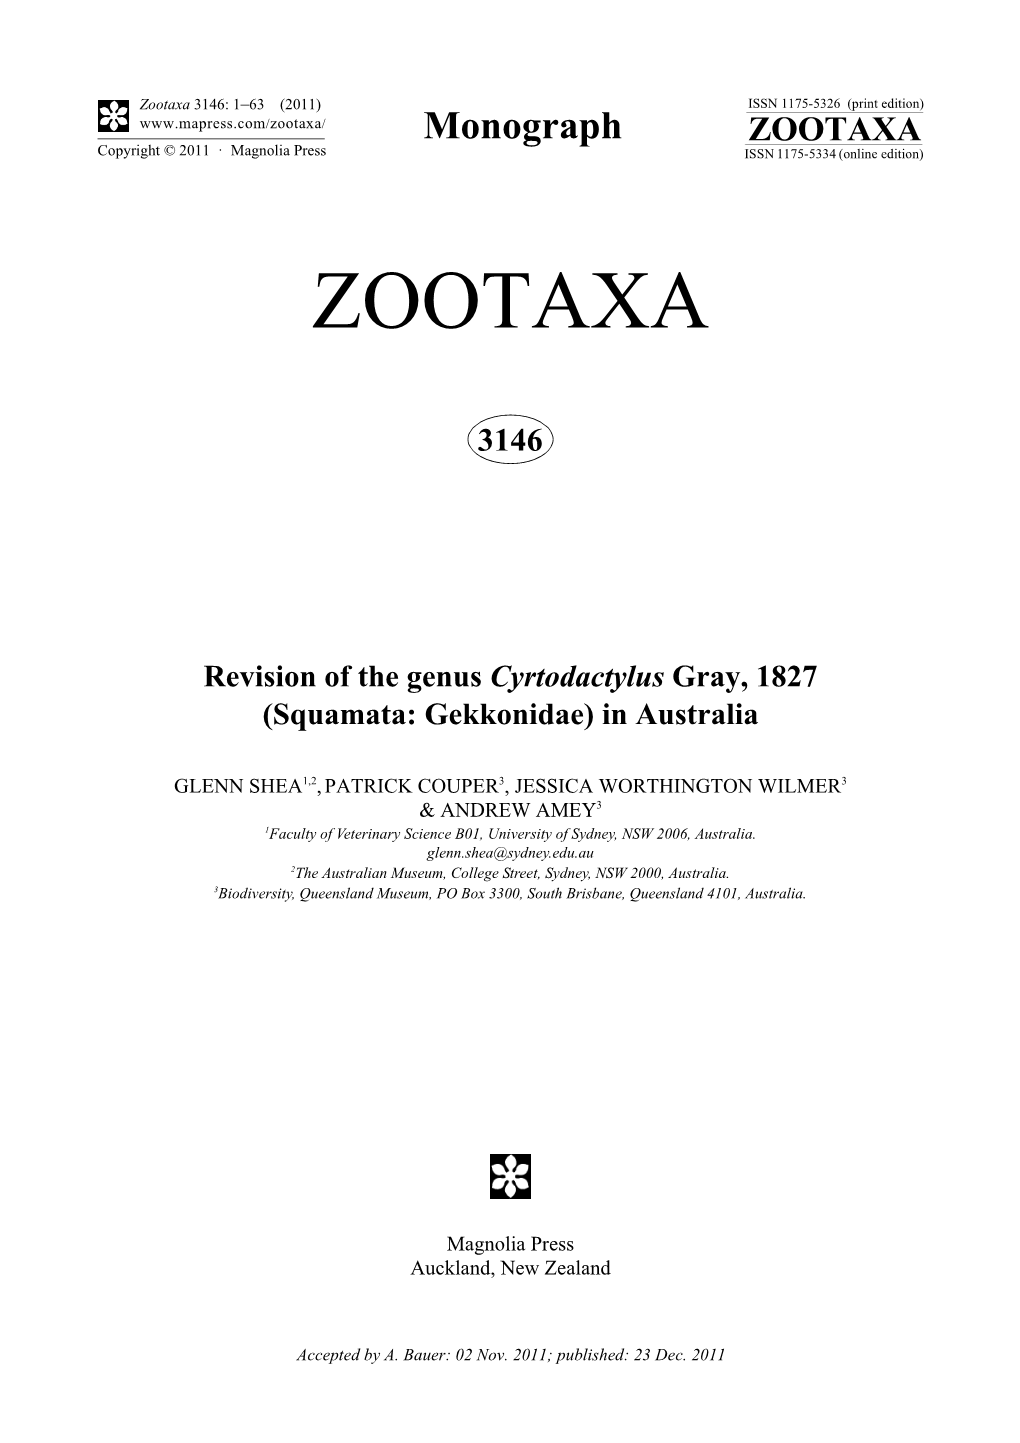 Revision of the Genus Cyrtodactylus Gray, 1827 (Squamata: Gekkonidae) in Australia